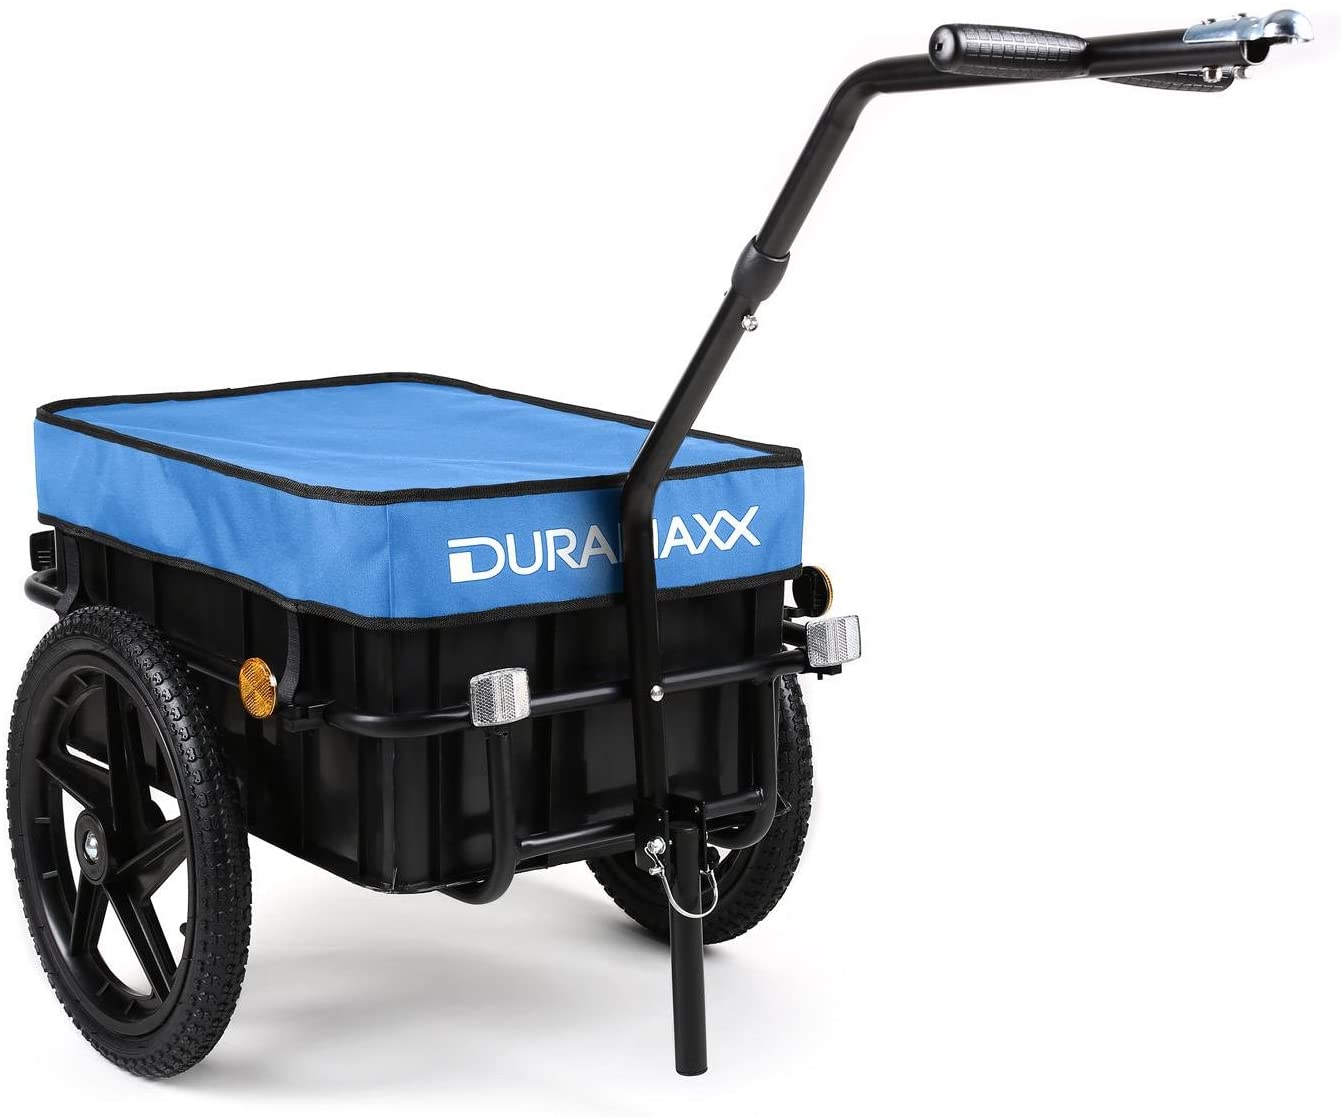  Duramaxx Big Mike - Remolque para bicicletas 70 L (cesta extraible, estructura metalica, 40kg max., lona impermeable, apto uso como carrito, neumaticos con valvula) 